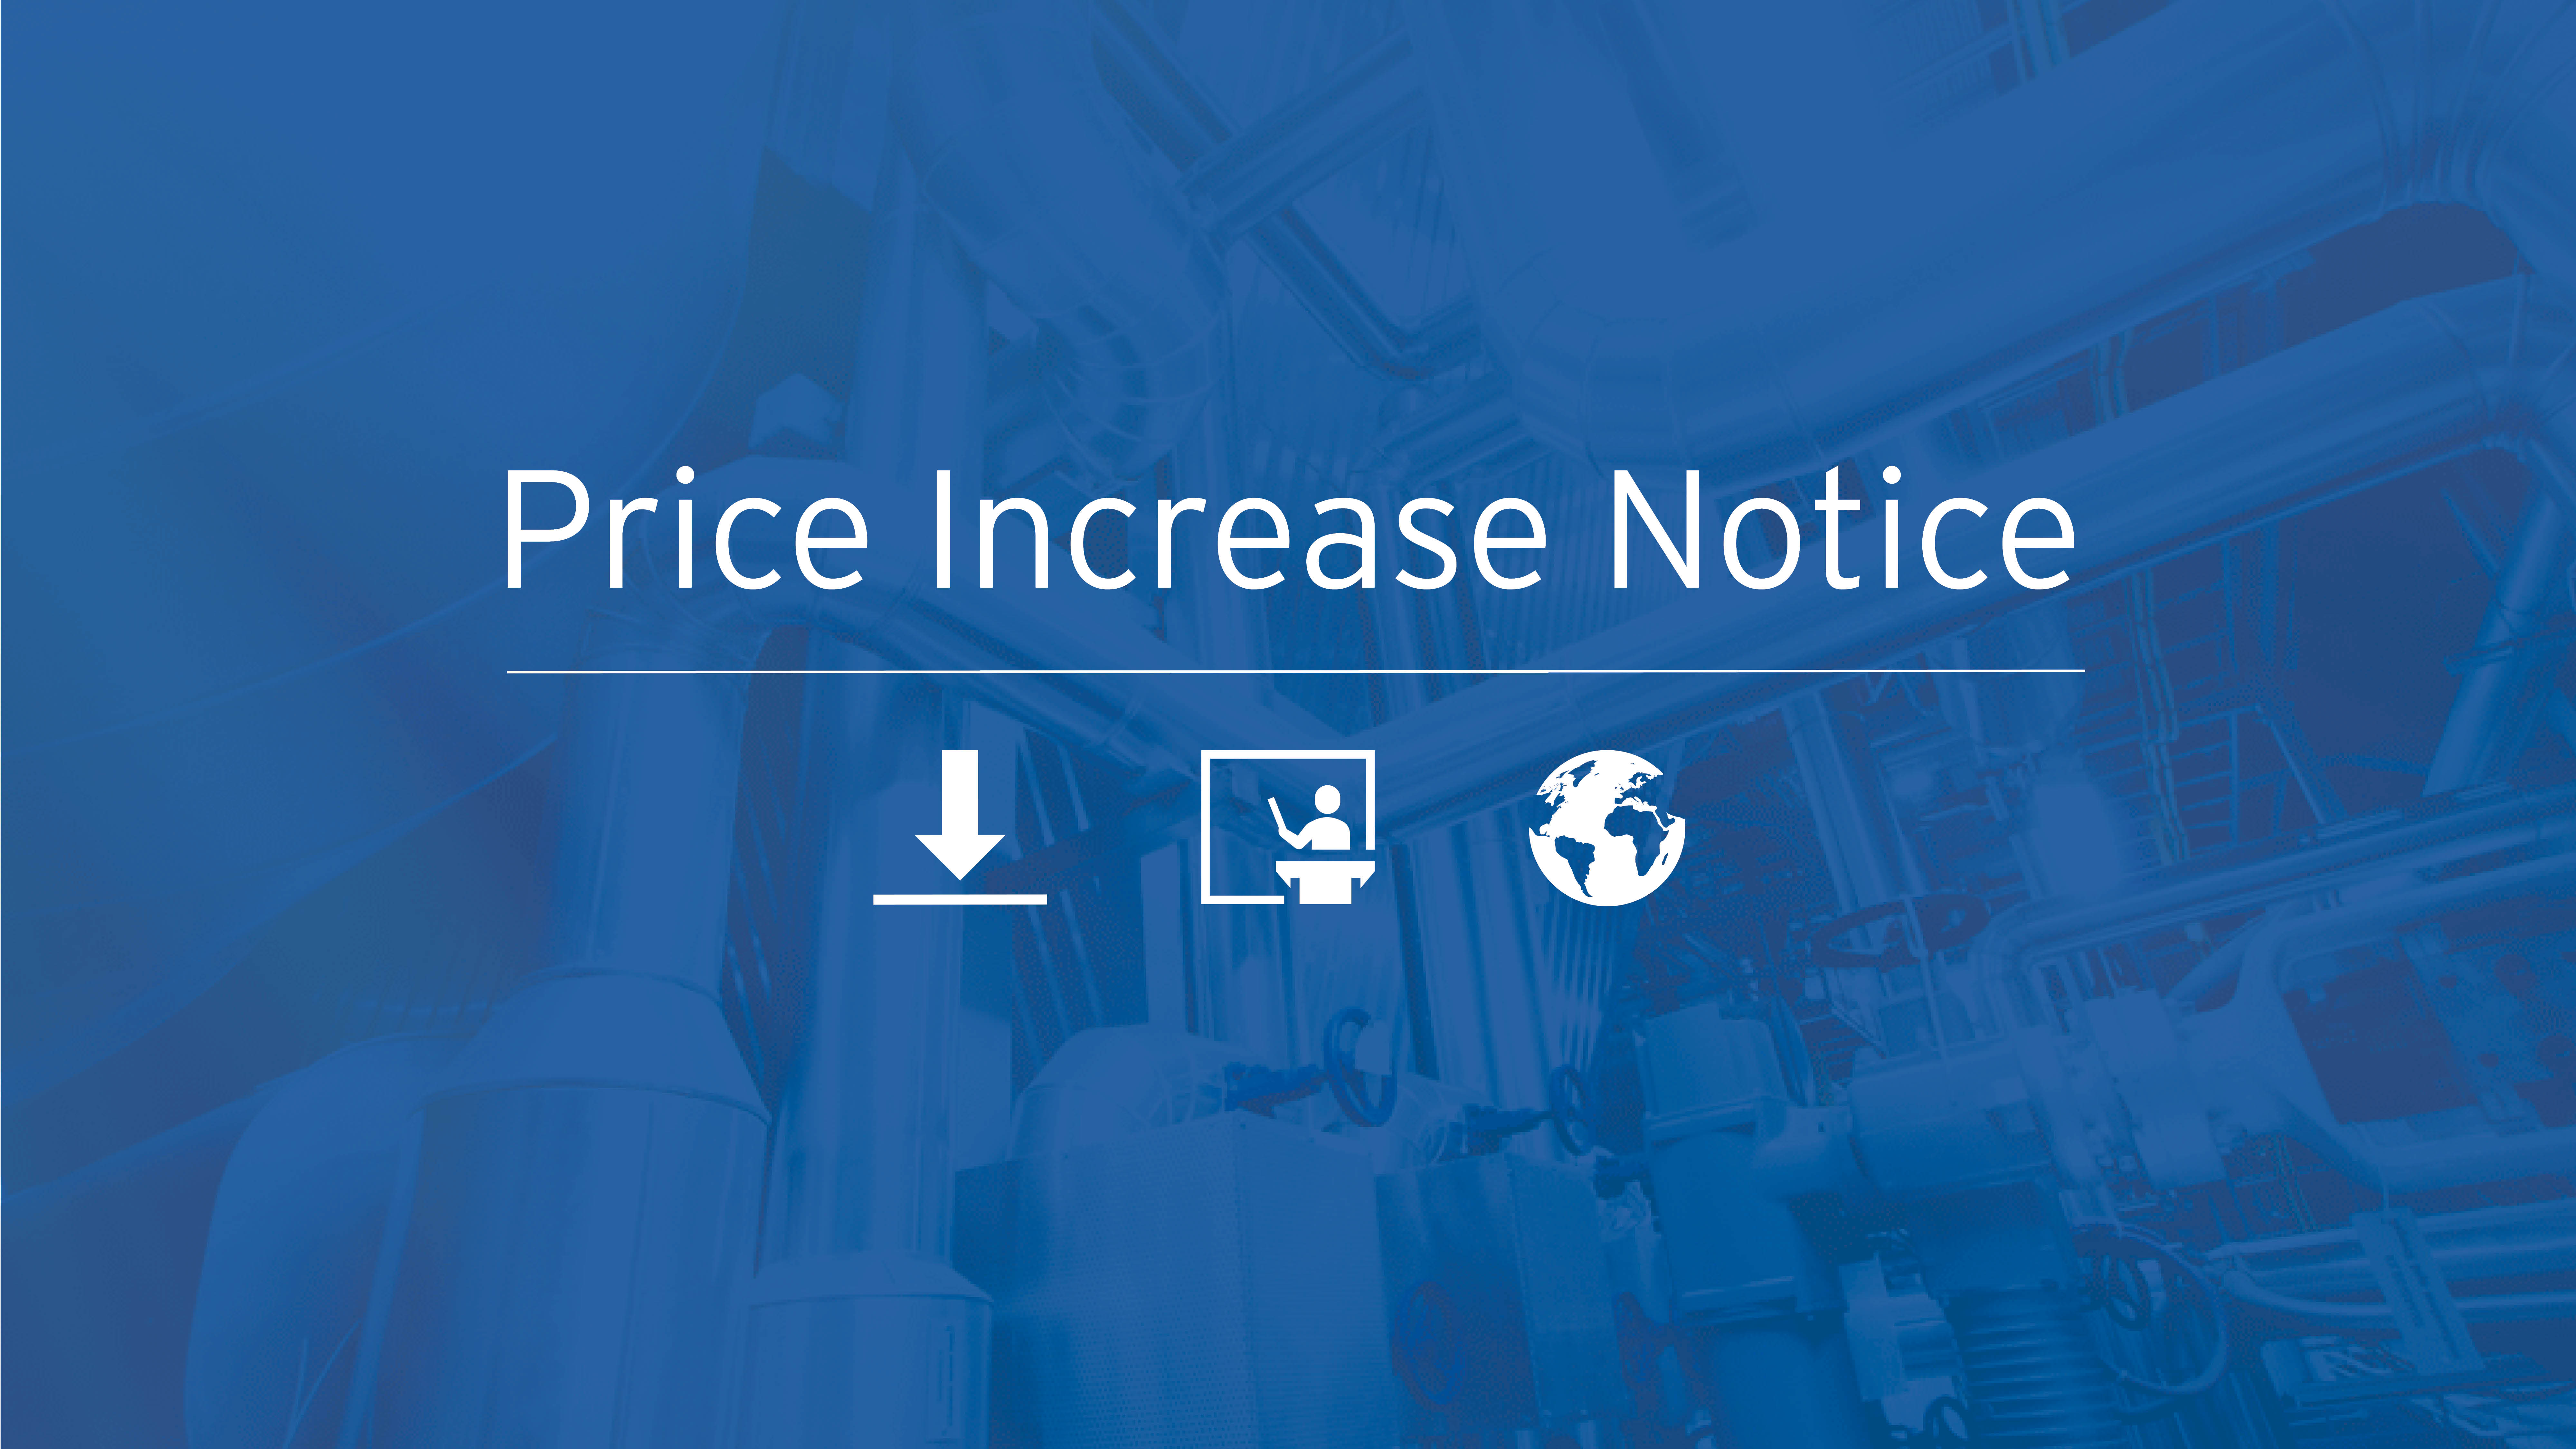 AFT Price Increase Image 